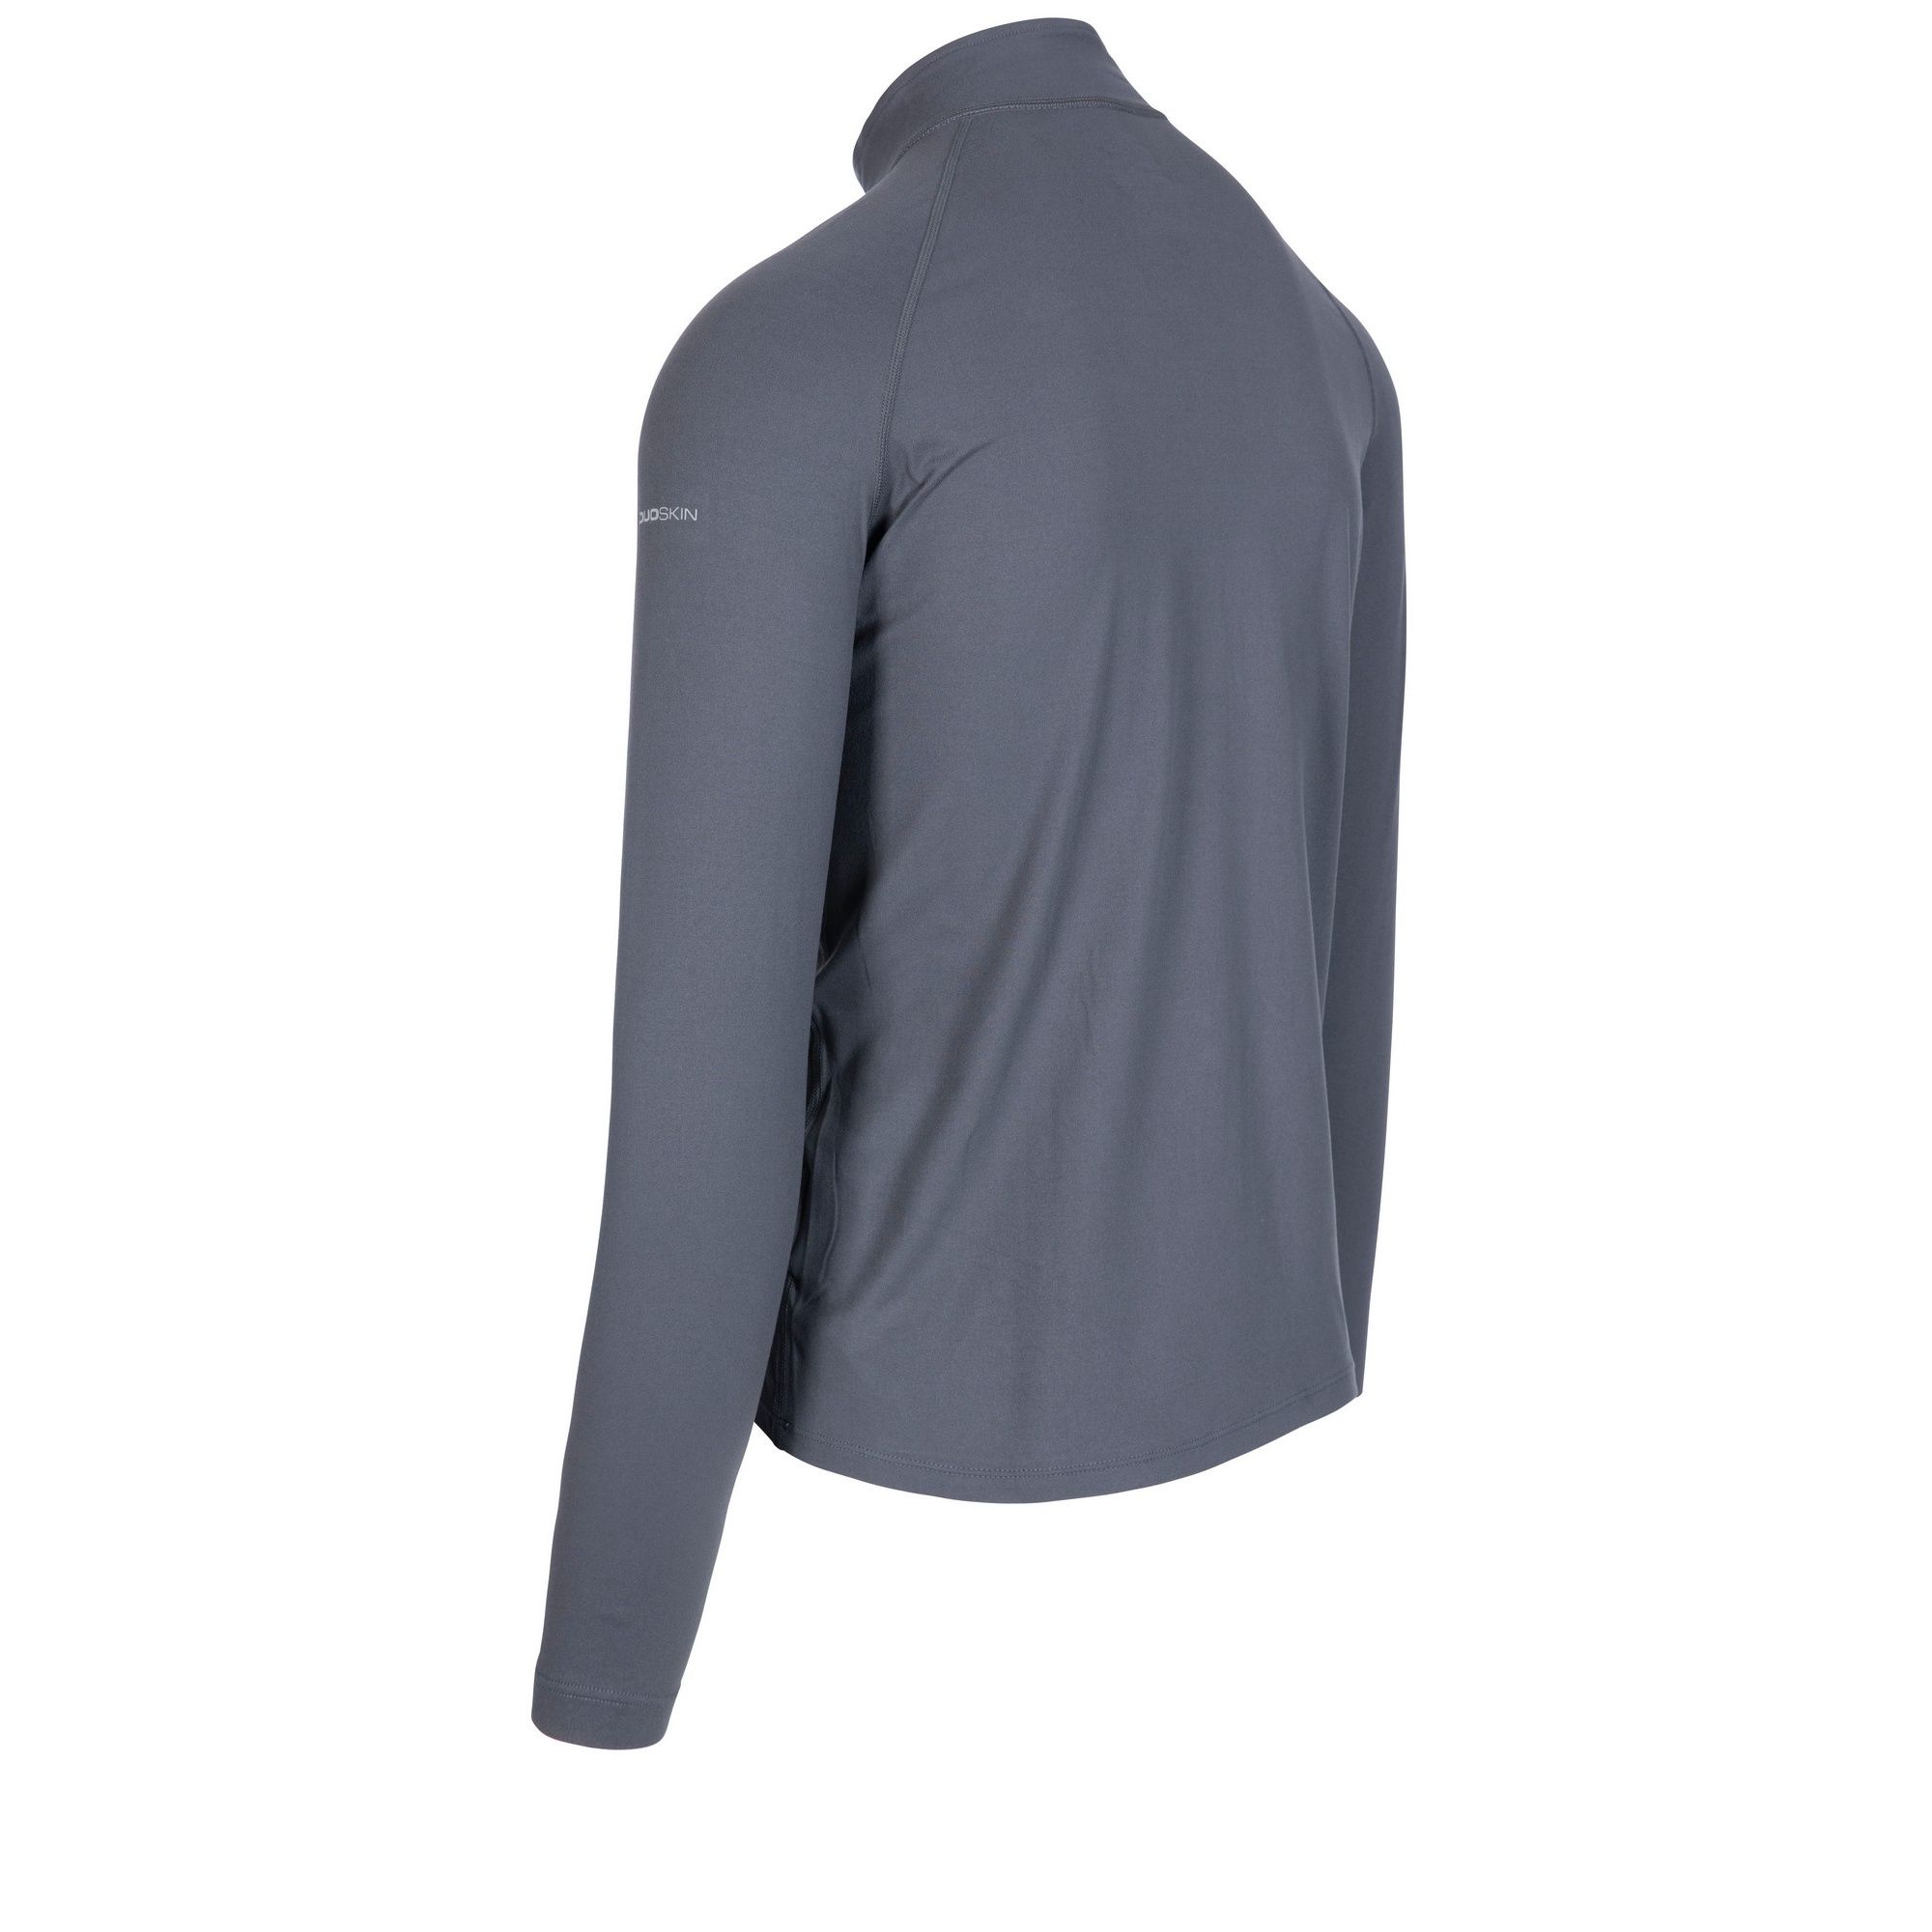 Mens acitve4 top with 1/2 zip neck. Long sleeves. Contrast zip. Reflective print logos. Quick drying. Materials: 88% polyester/ 12% elastane.